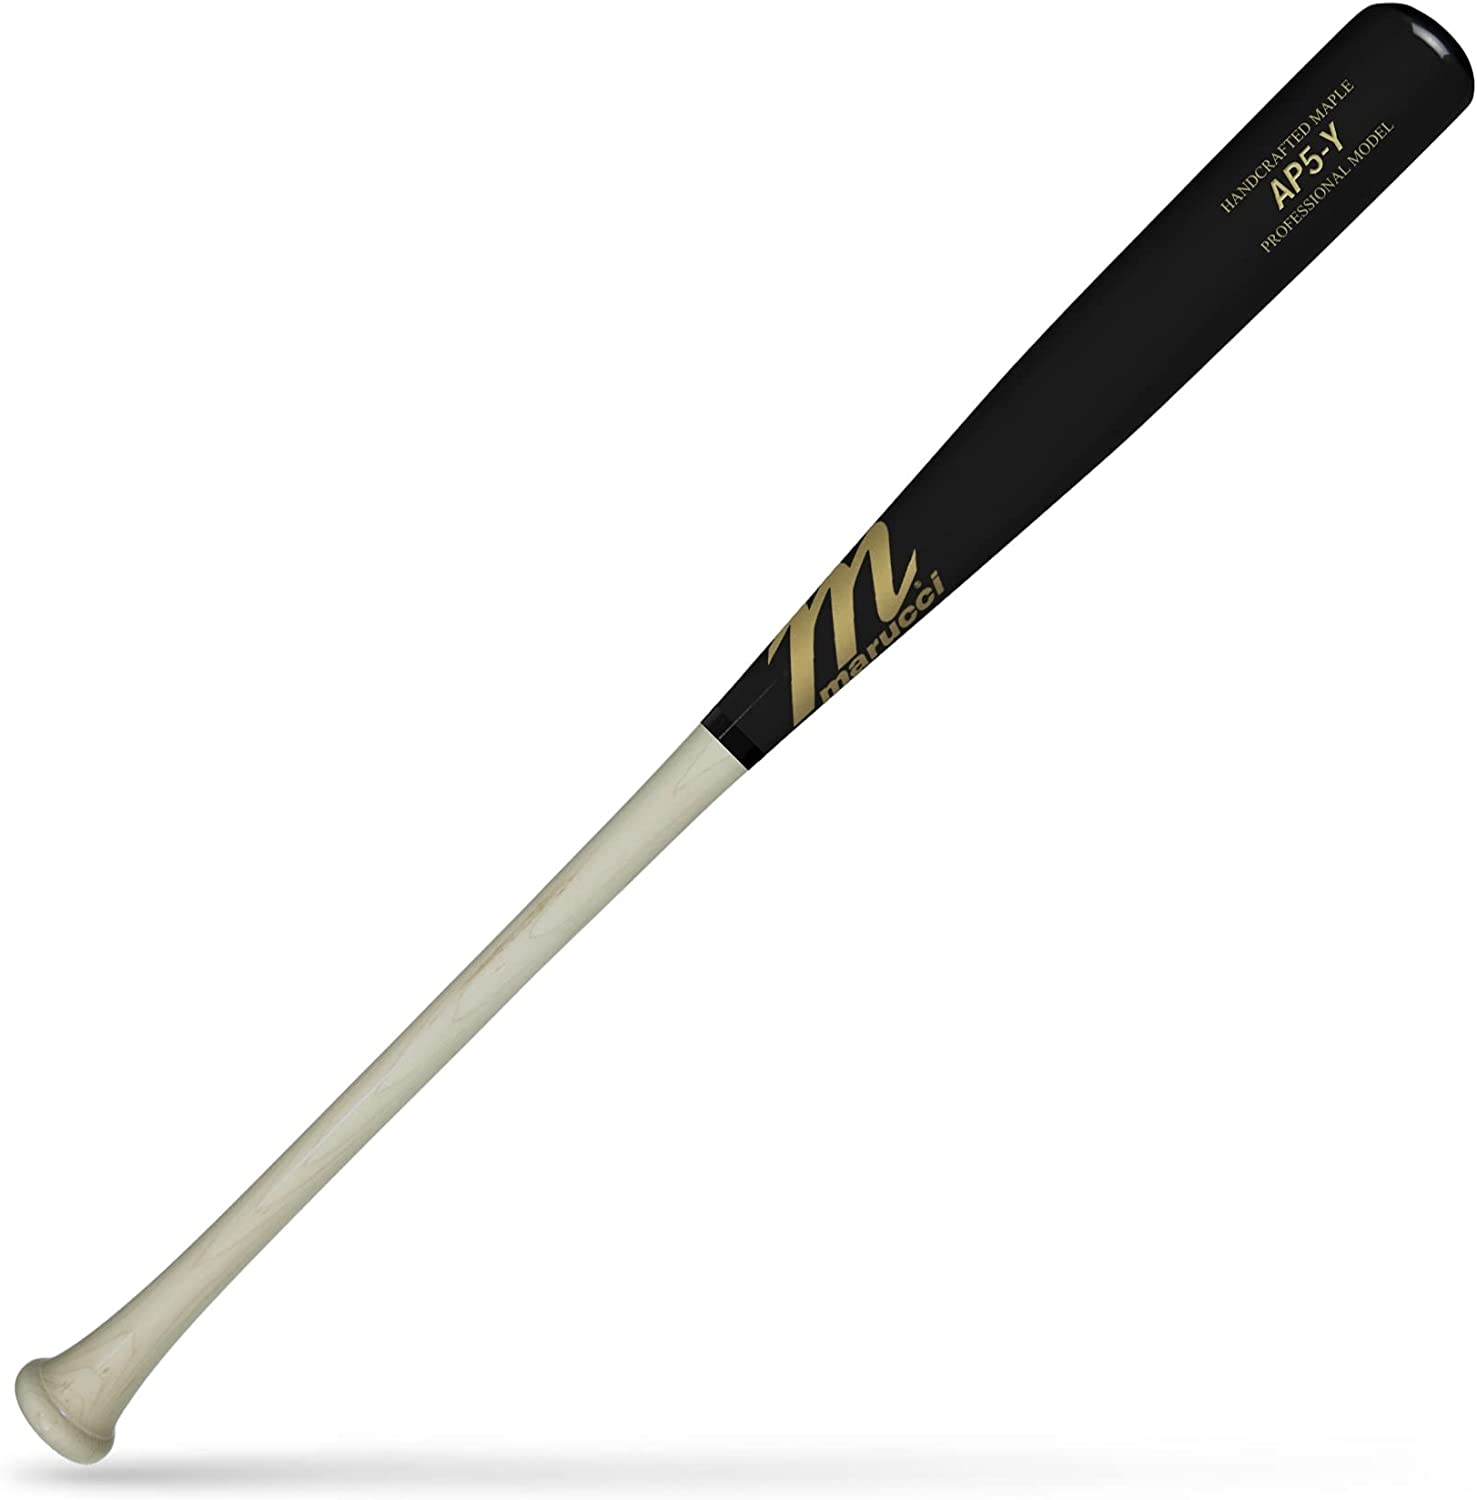 marucci-ap5-youth-model-natural-black-wood-baseball-bat-29-inch MYVE3AP5-NBK-29 Marucci  The Marucci AP5 Youth Wood Bat is designed to help young